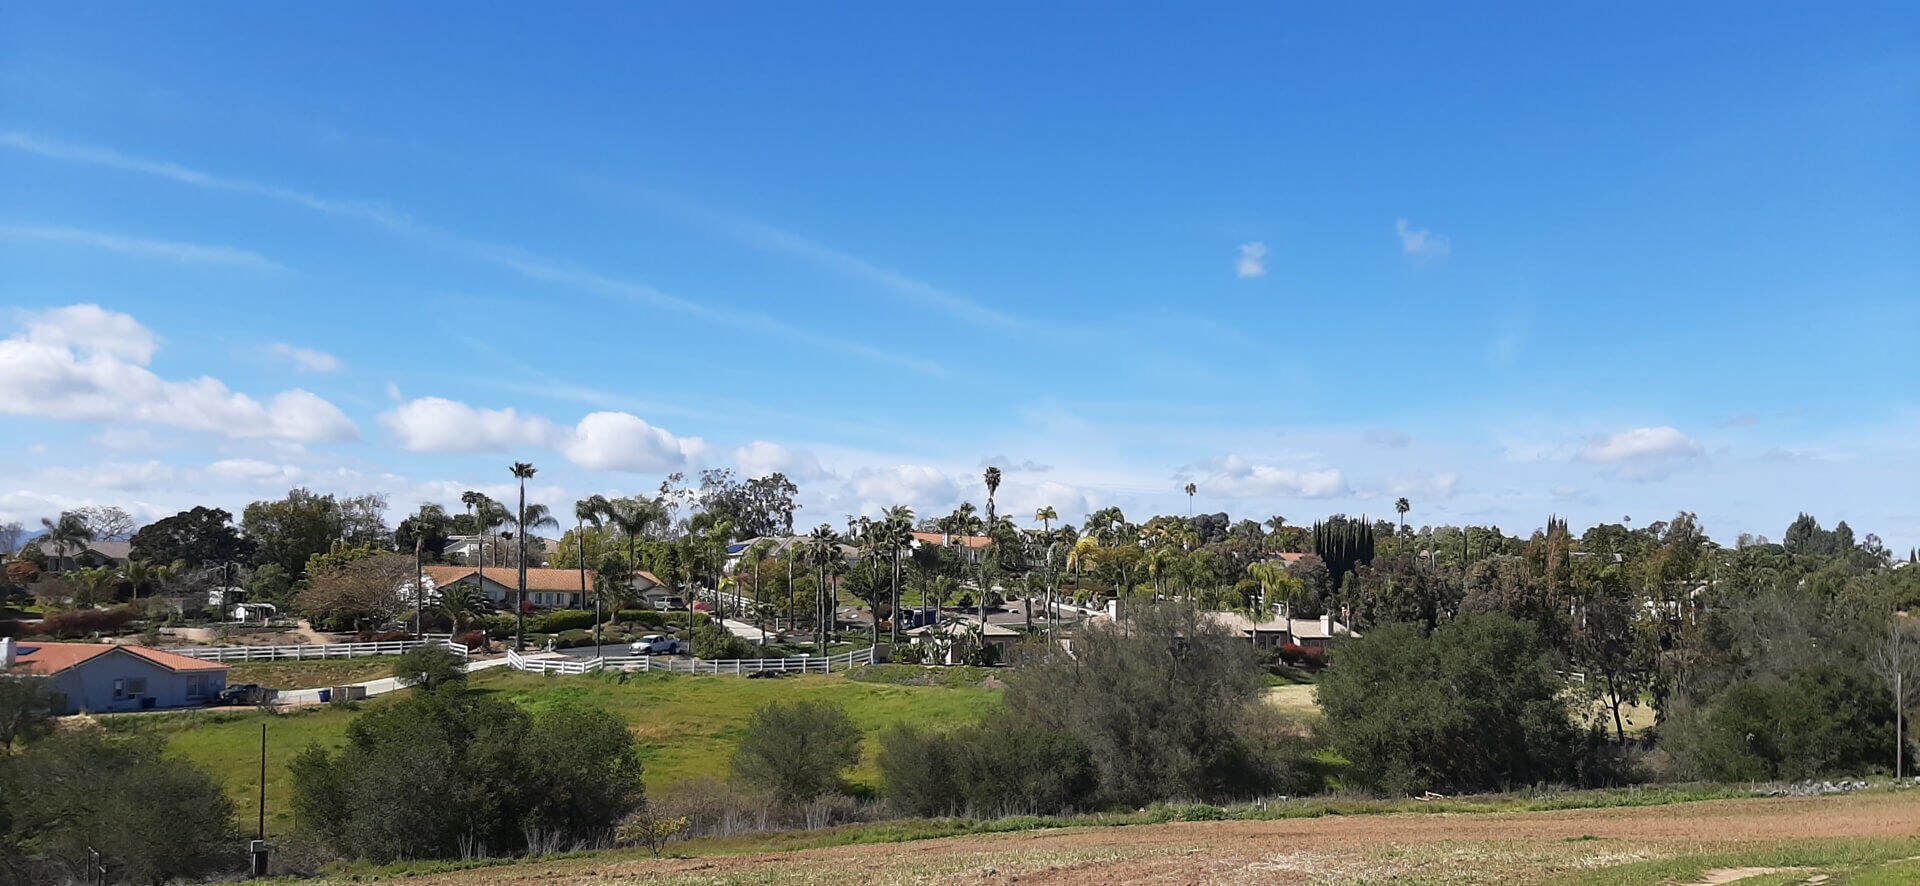 View of the Avowood Estates neighborhood in Fallbrook, California